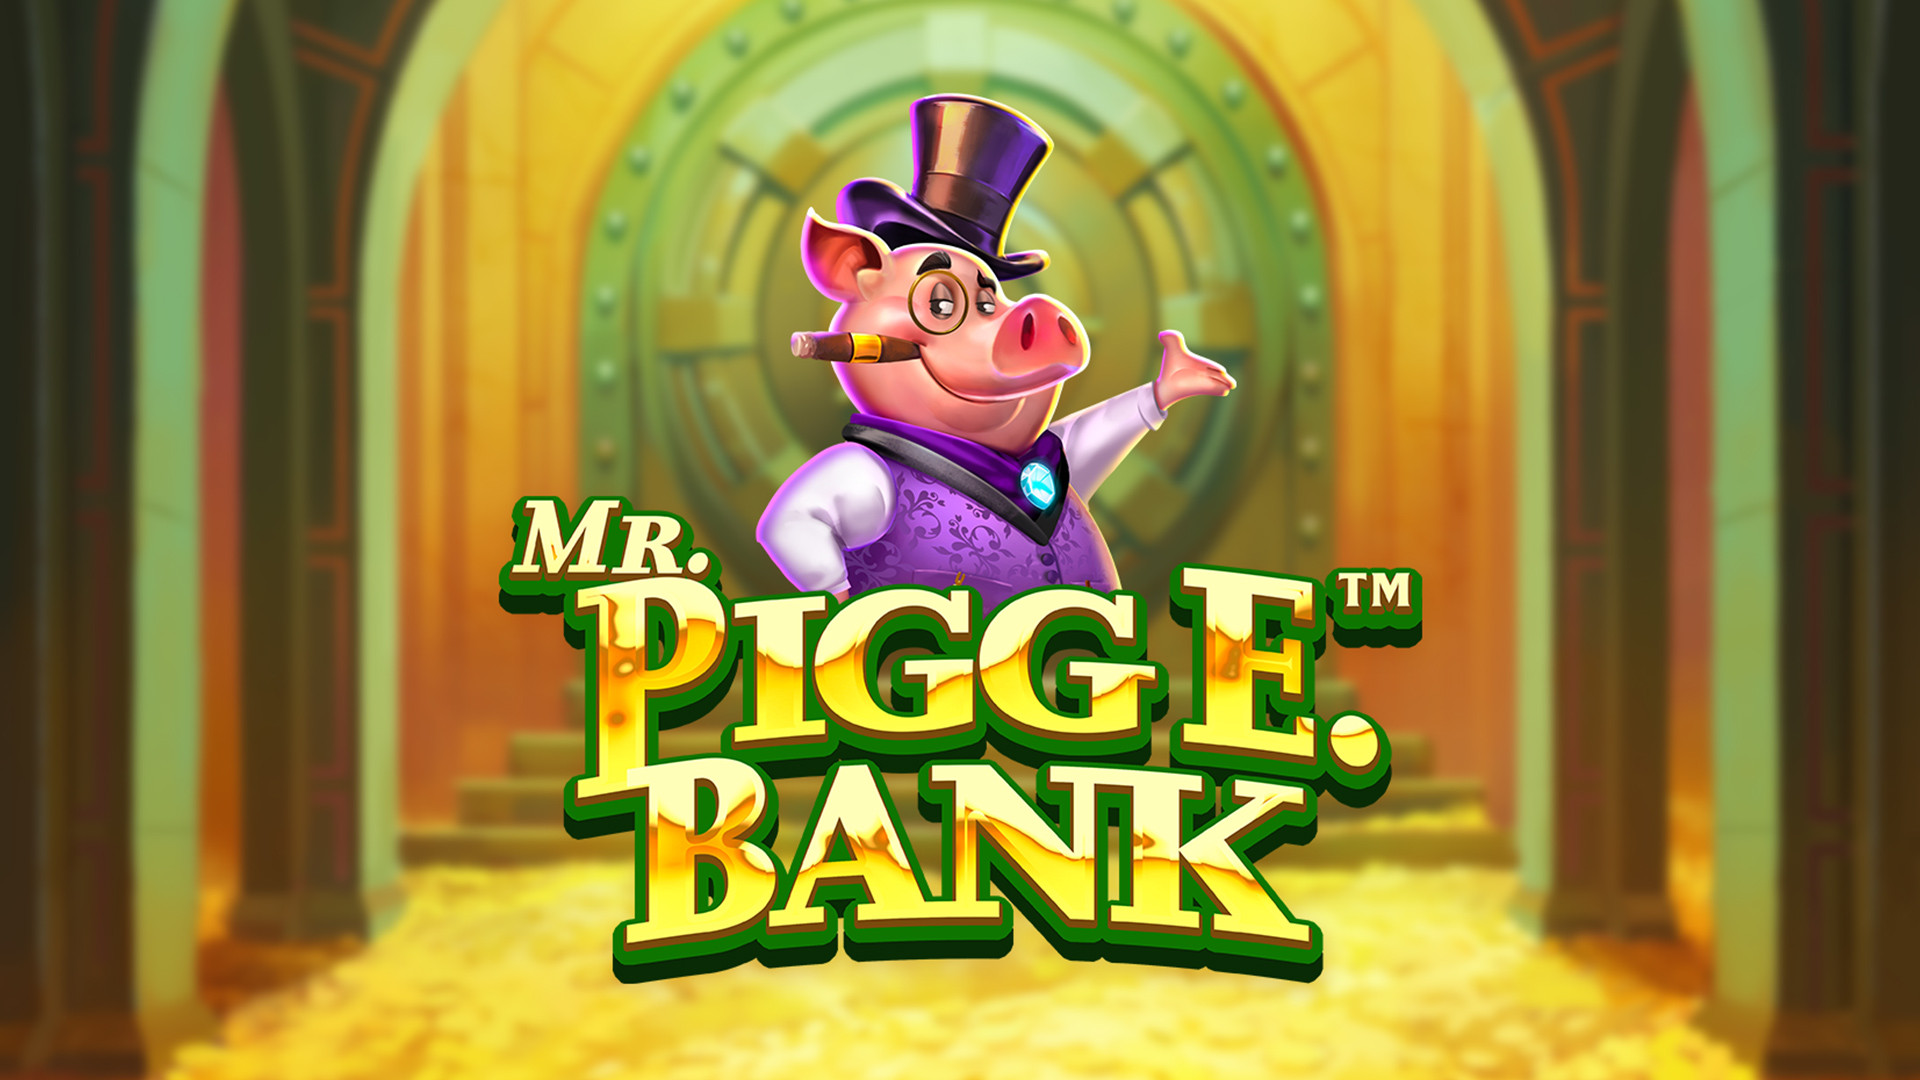 Mr. Pigg E. Bank